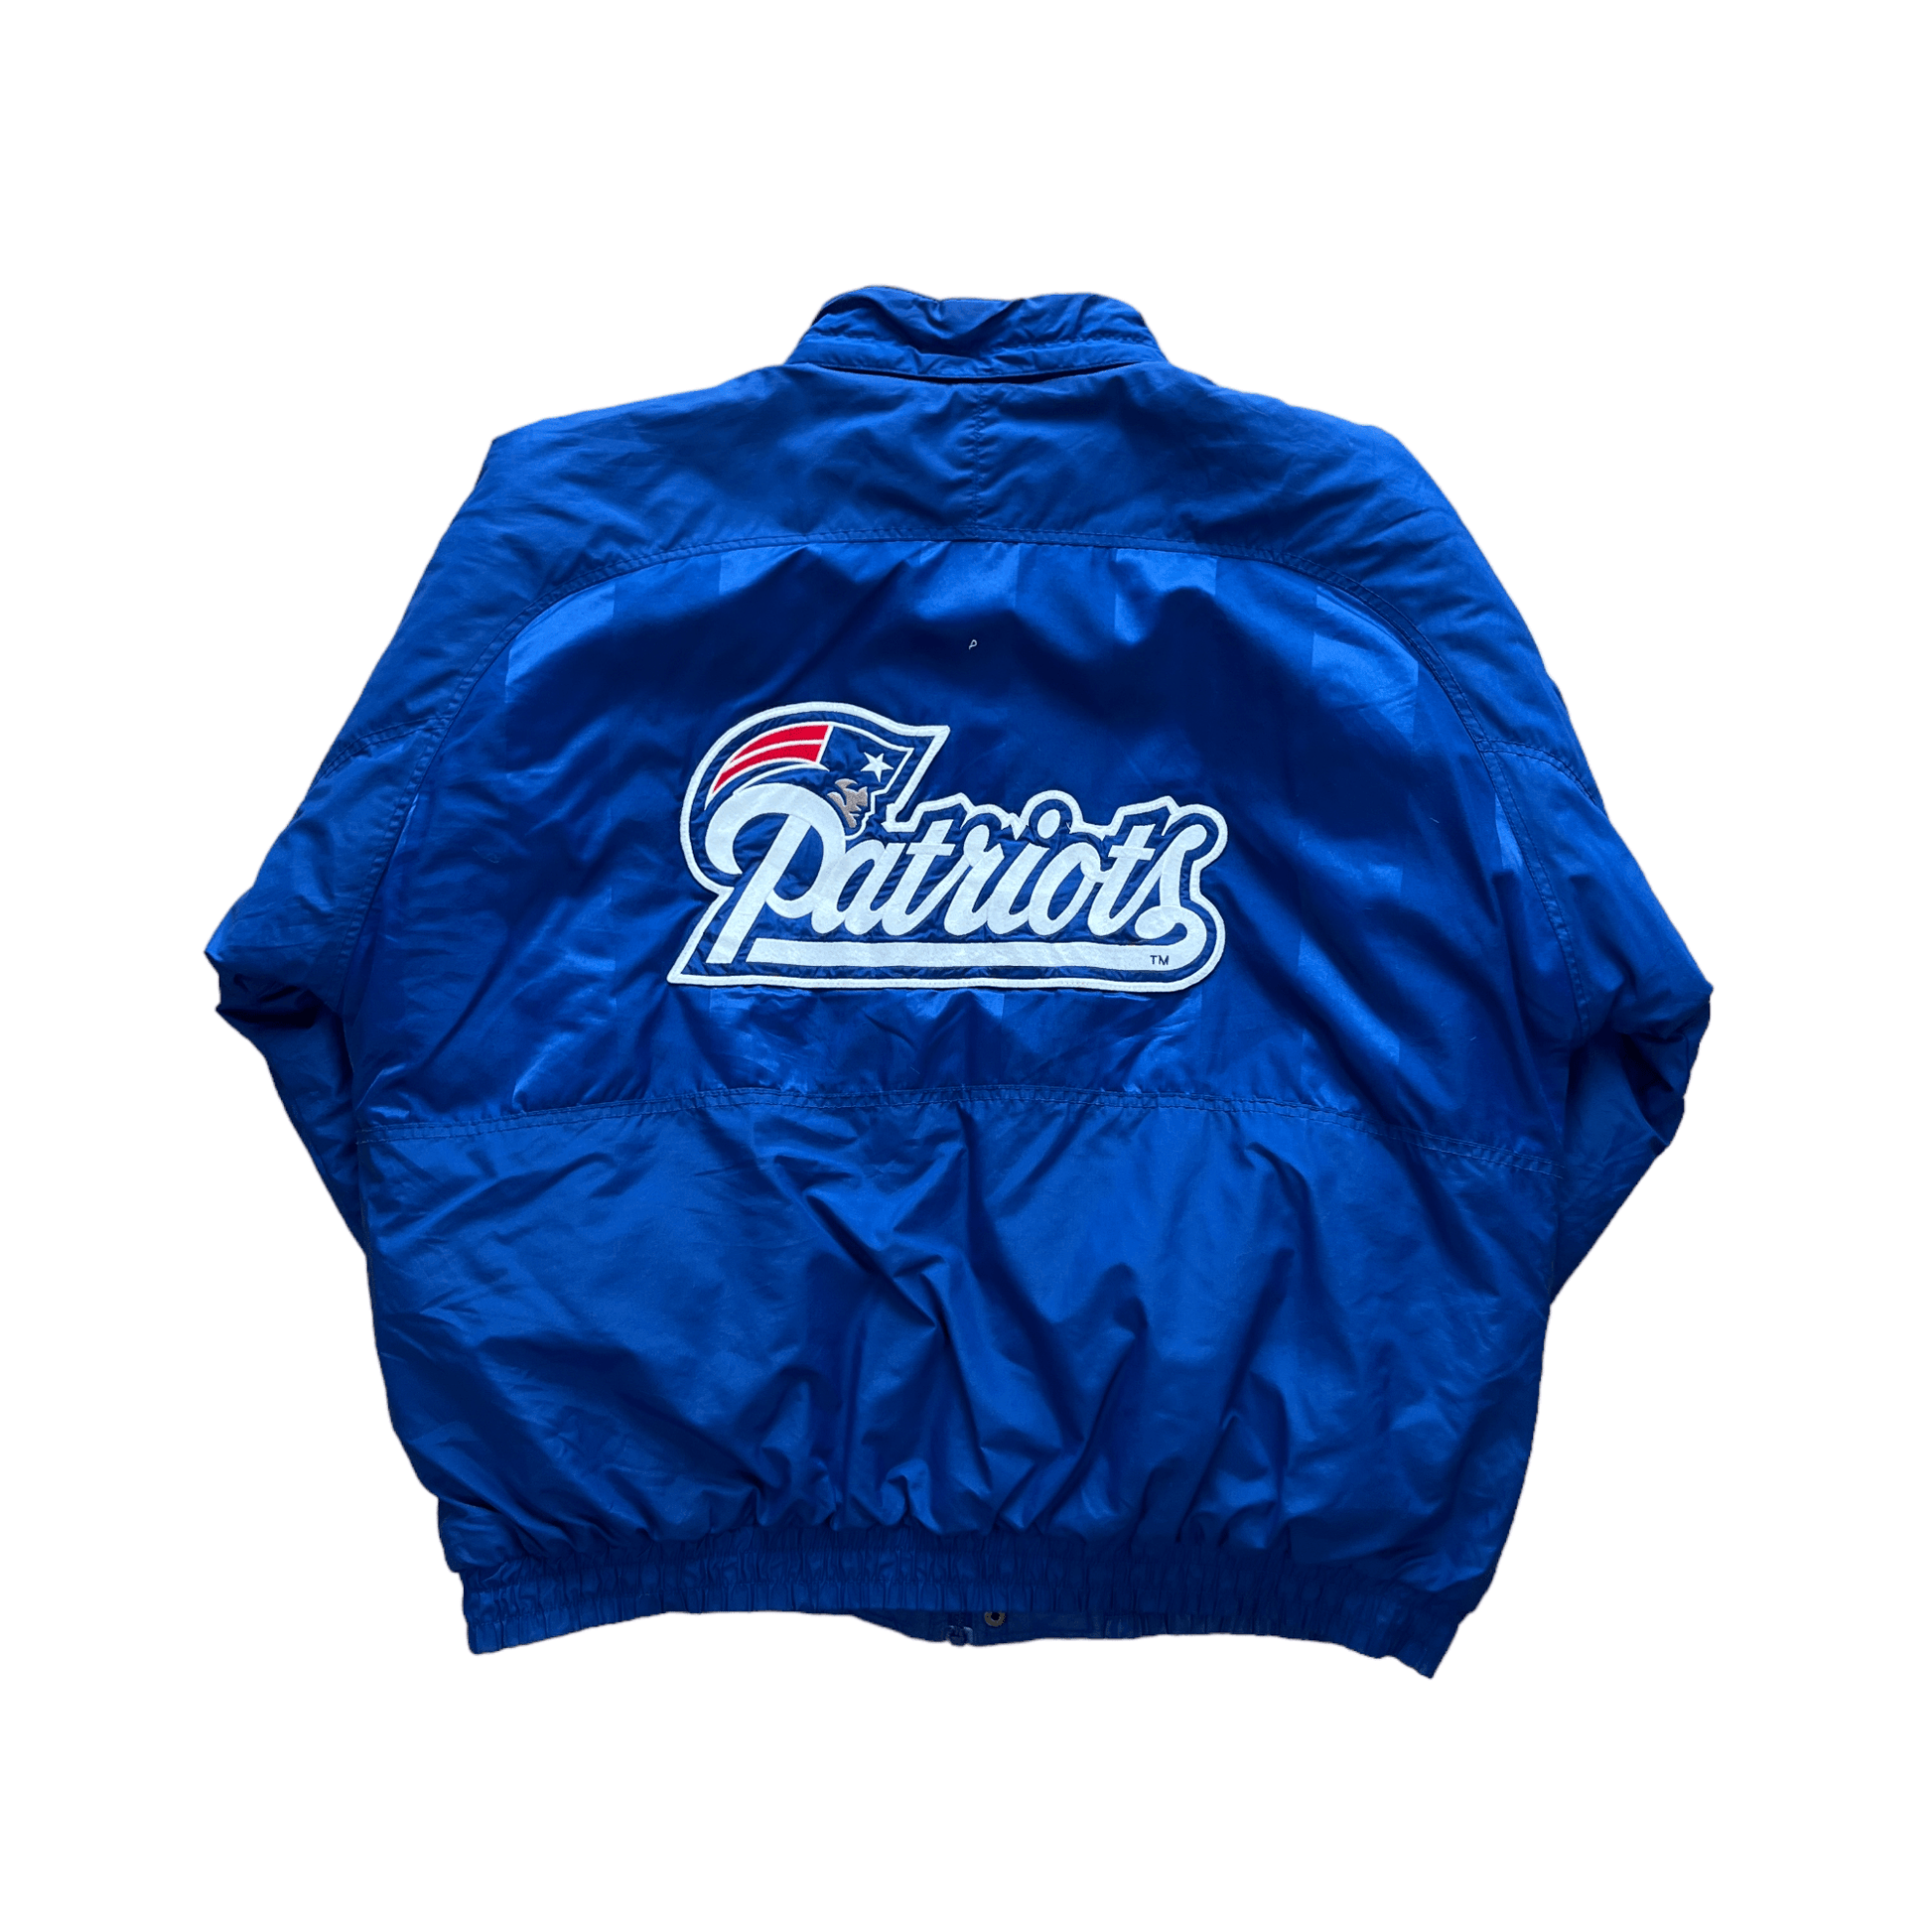 Vintage 90s Blue NFL Pro Patriots Puffer Coat - Extra Large - The Streetwear Studio